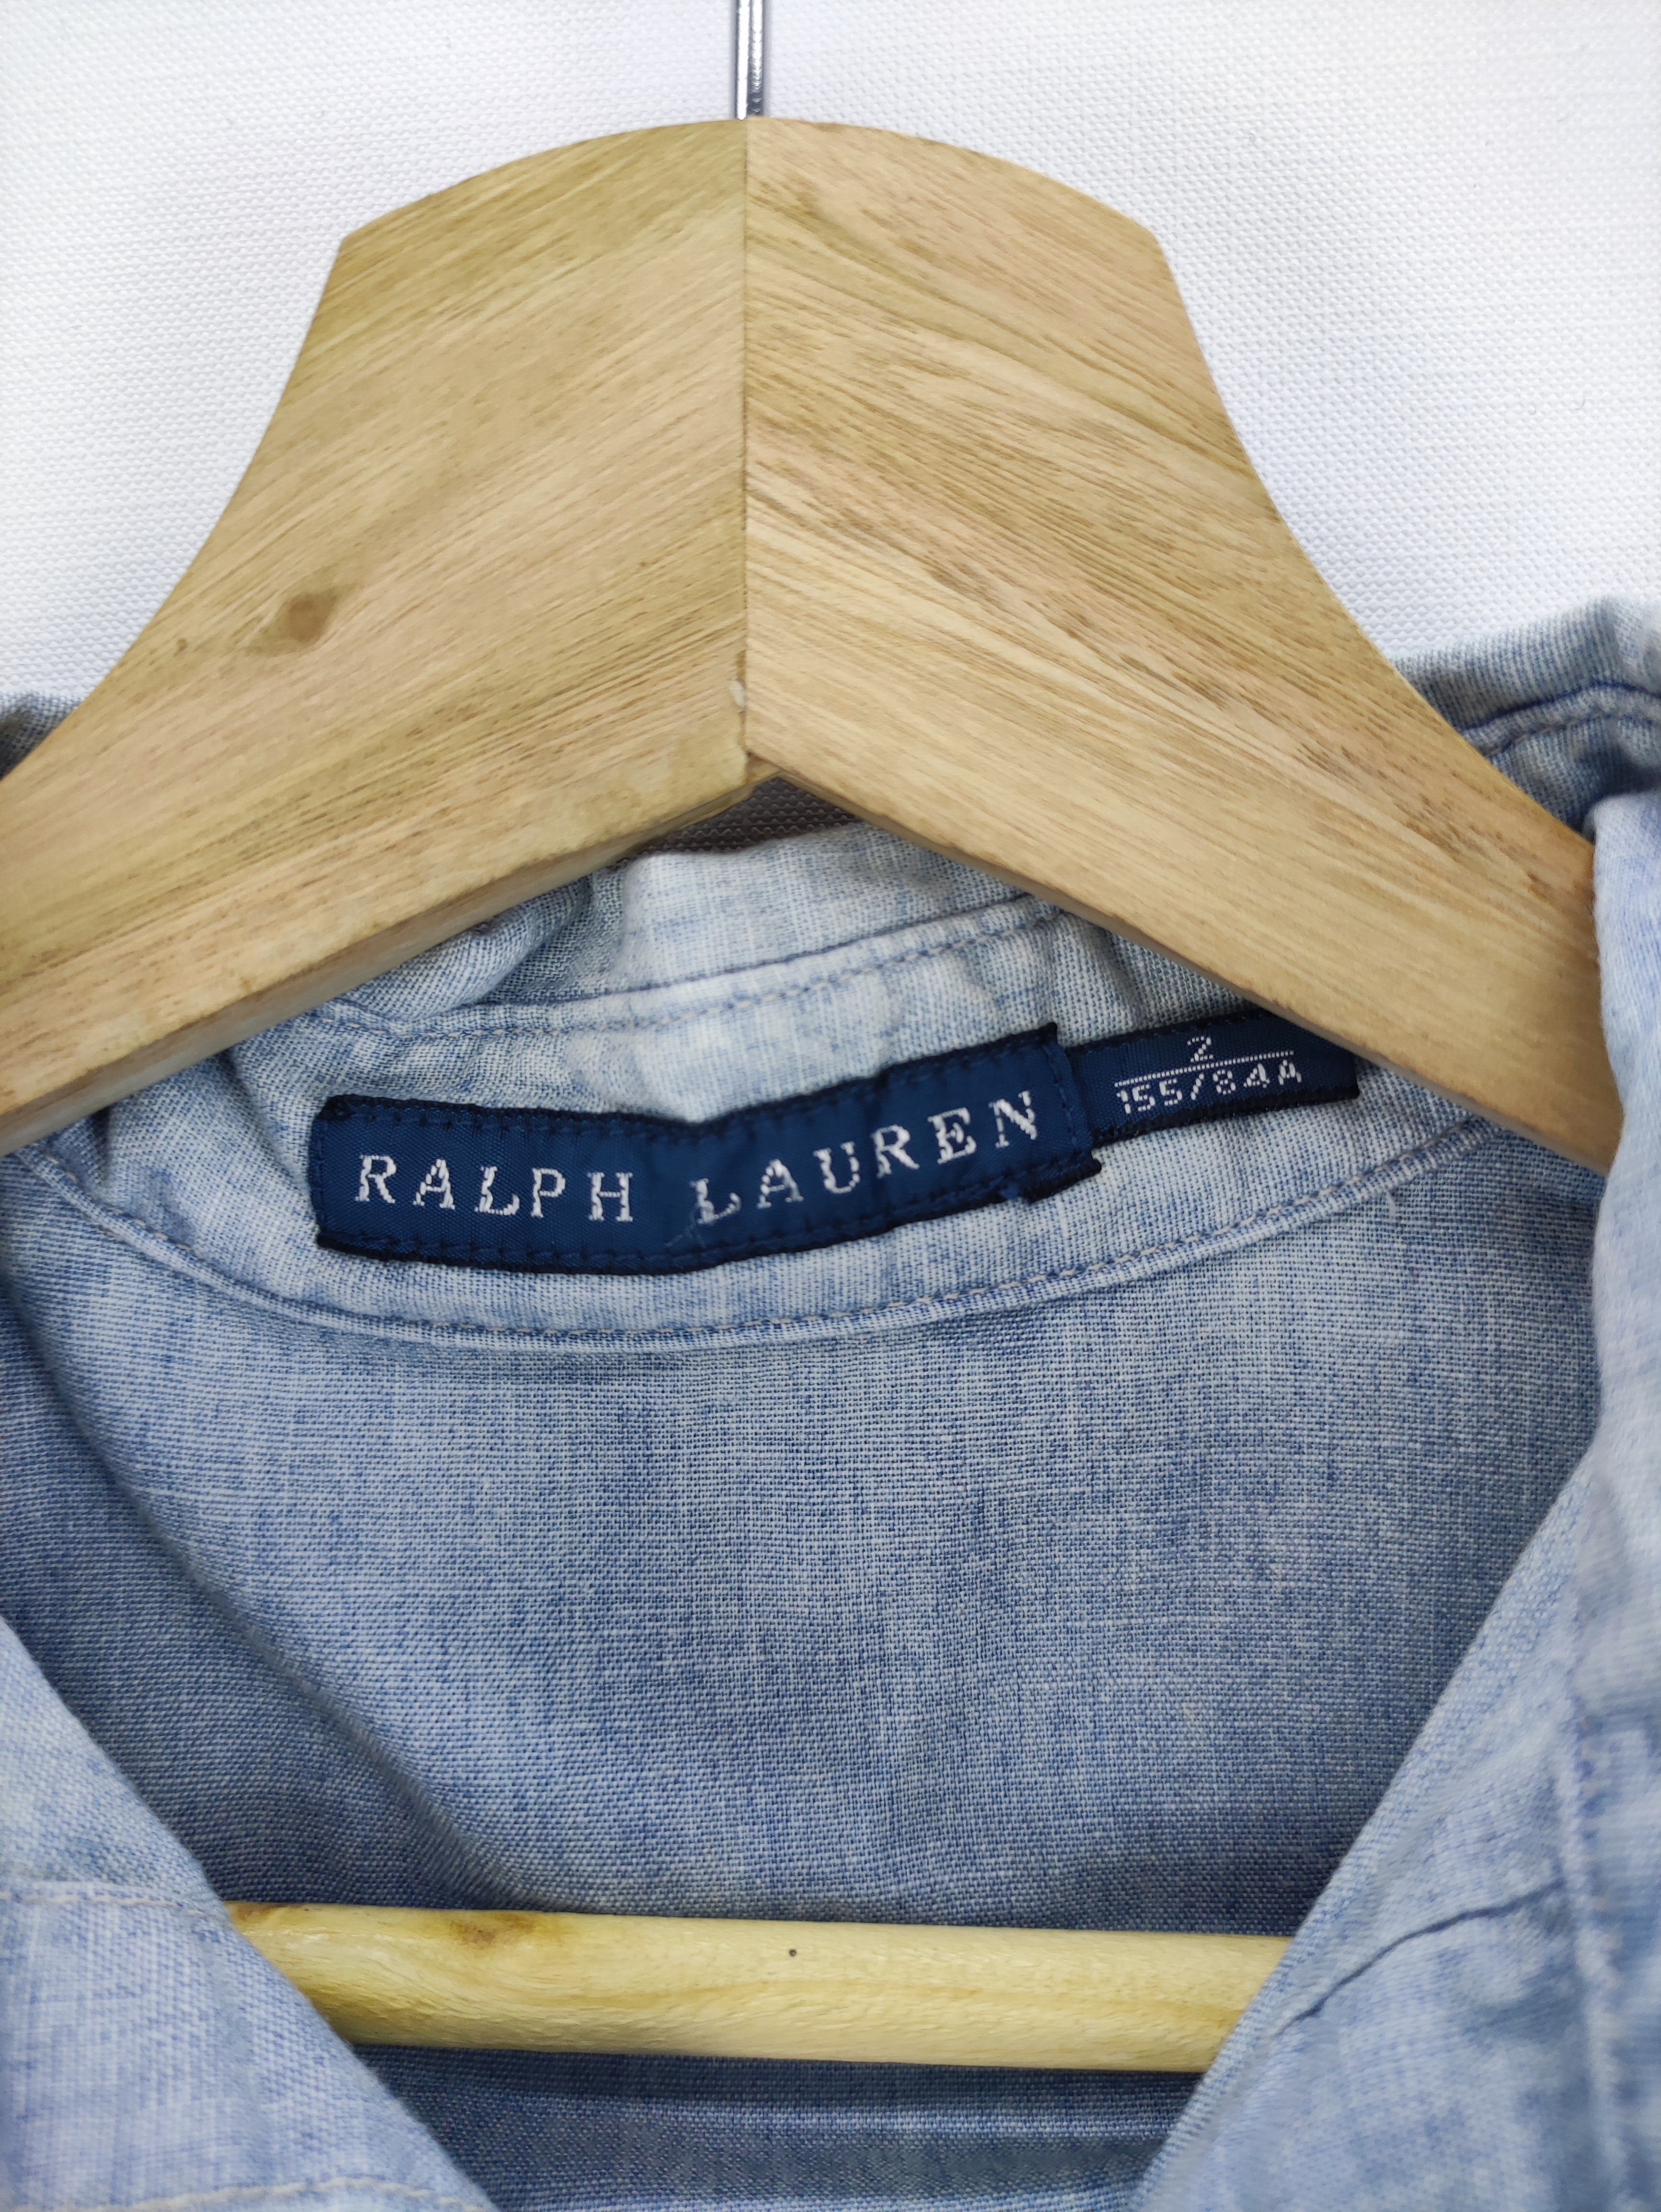 Vintage Ralph Lauren Shirts Button Up - 2